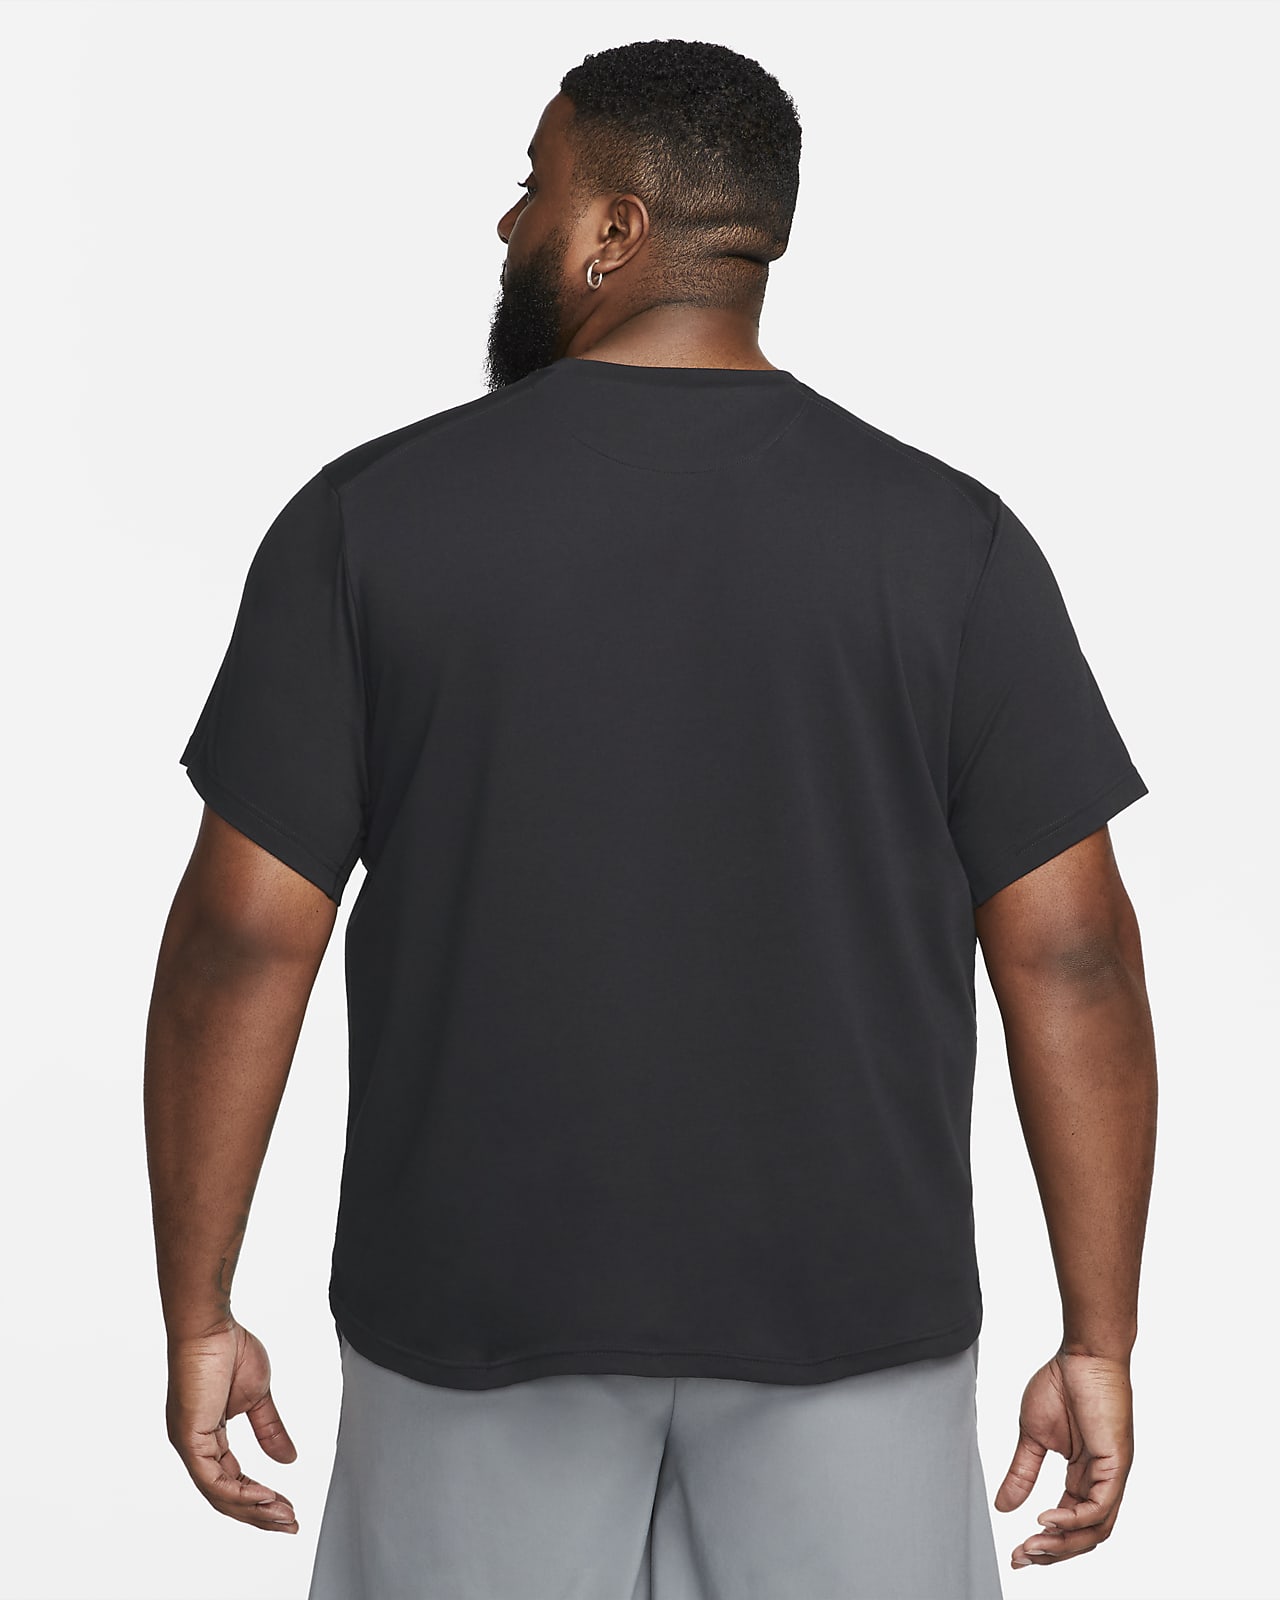 Planet Fitness Be Free Men's Black T-Shirt Size Medium